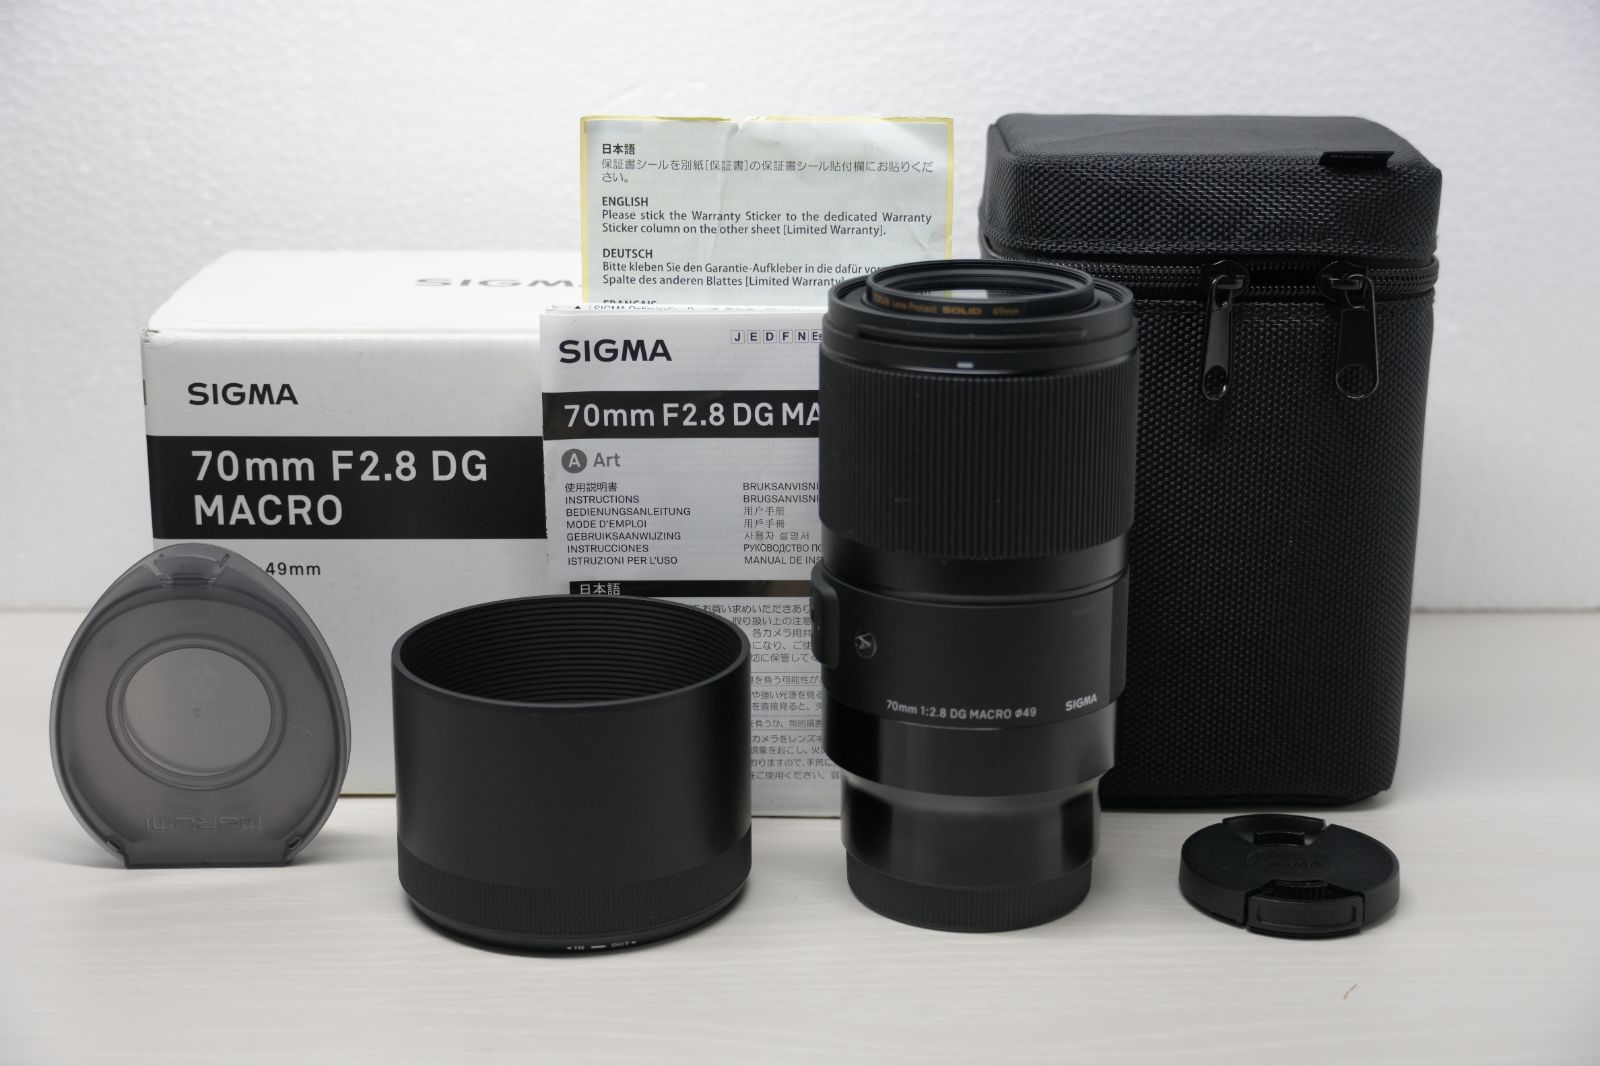 SIGMA 70mm F2.8 DG MACRO | Art A018 SONY-Eマウント フルサイズ対応 